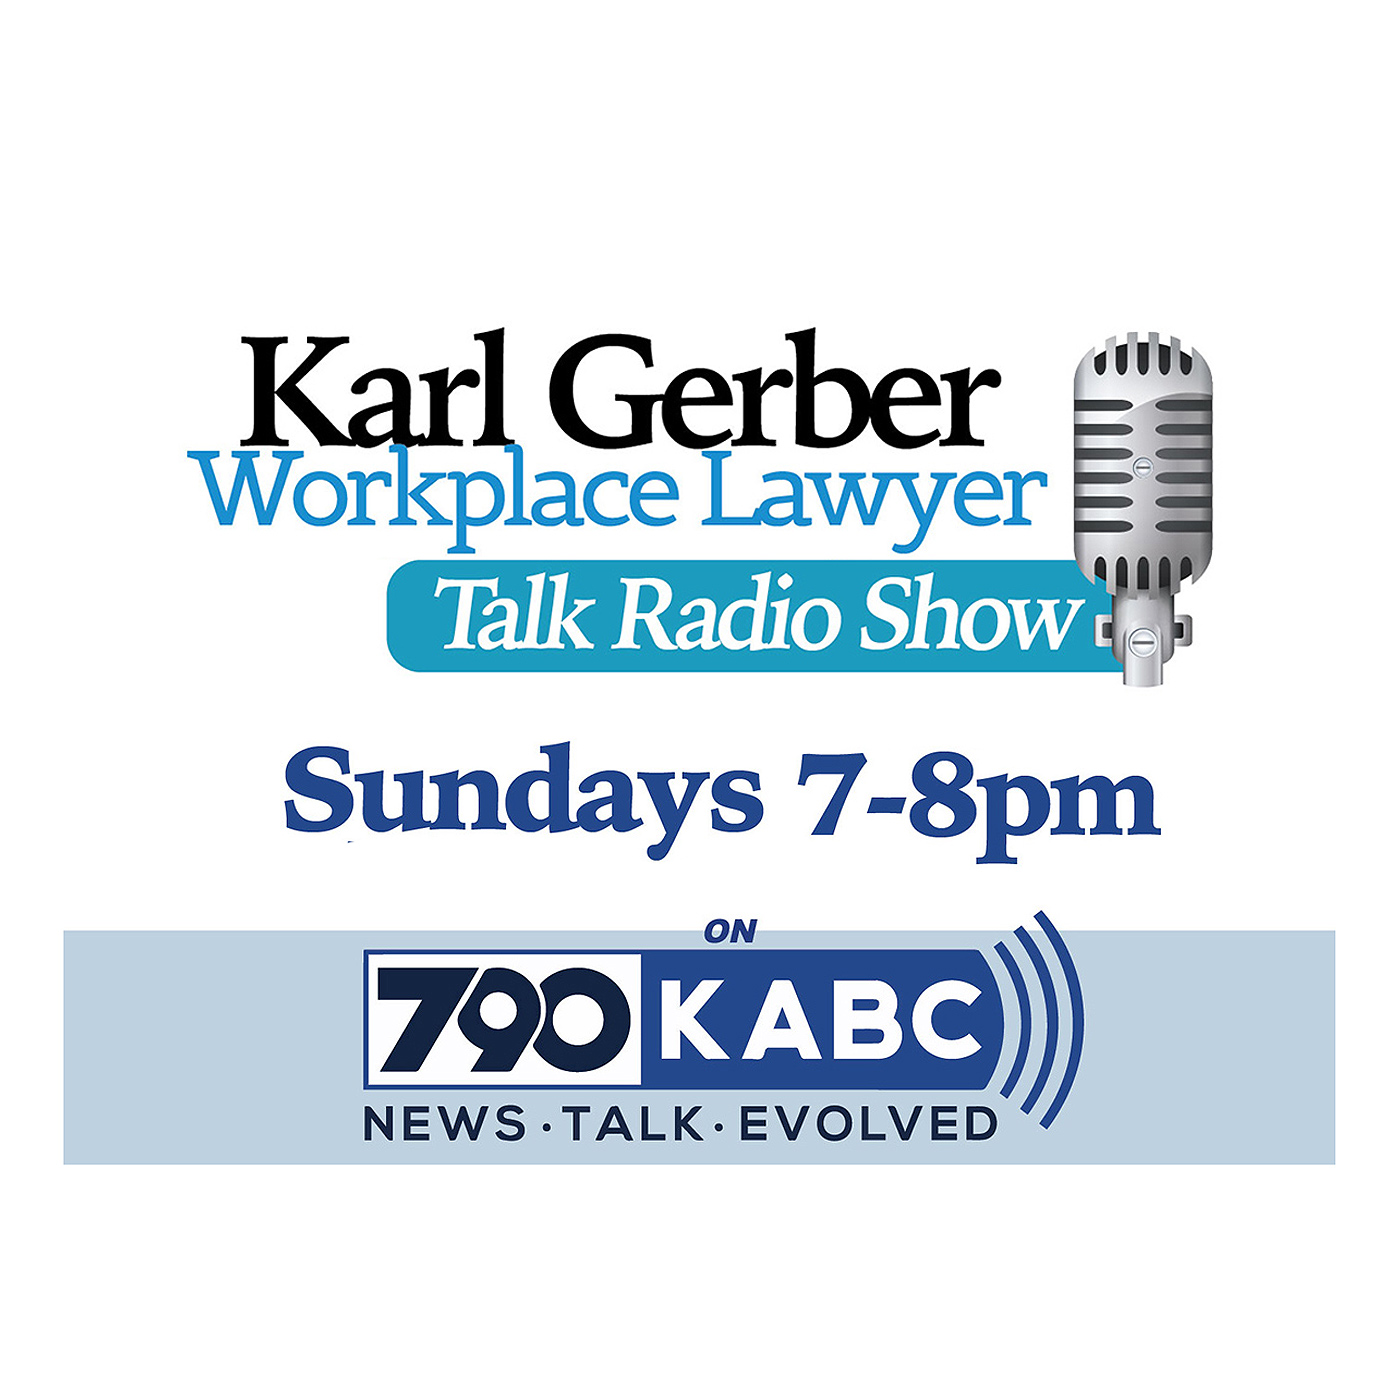 Karl Gerber Workplace Lawyer